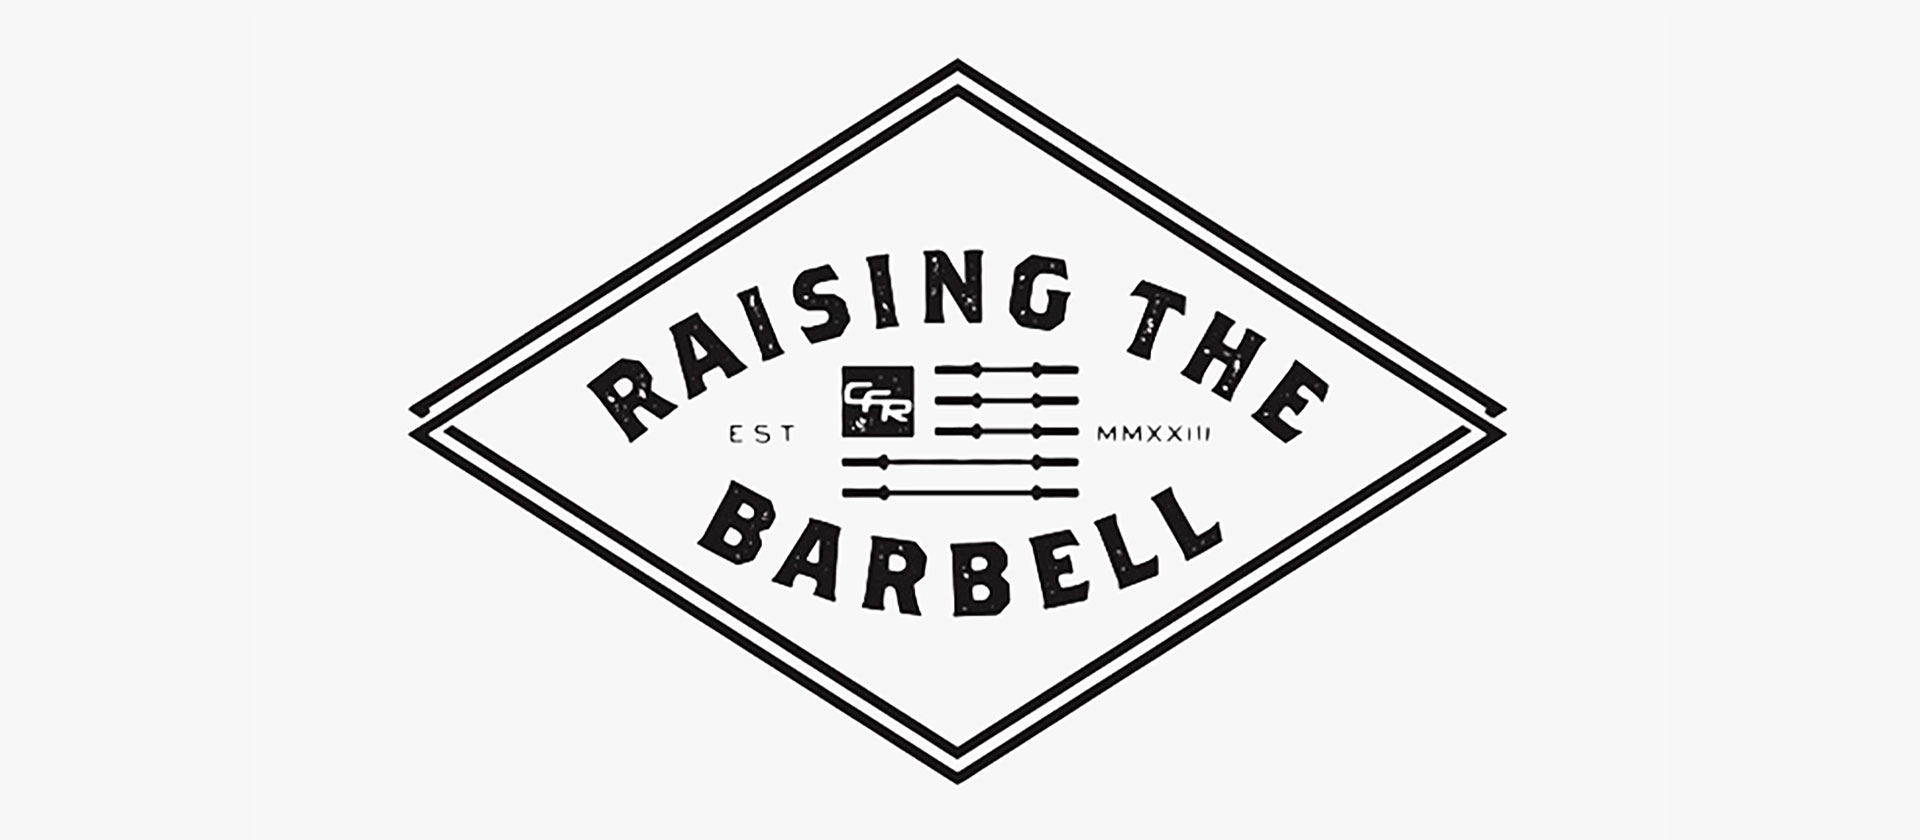 Raising The Barbell Olympic Lifting Near Billings, Missouri